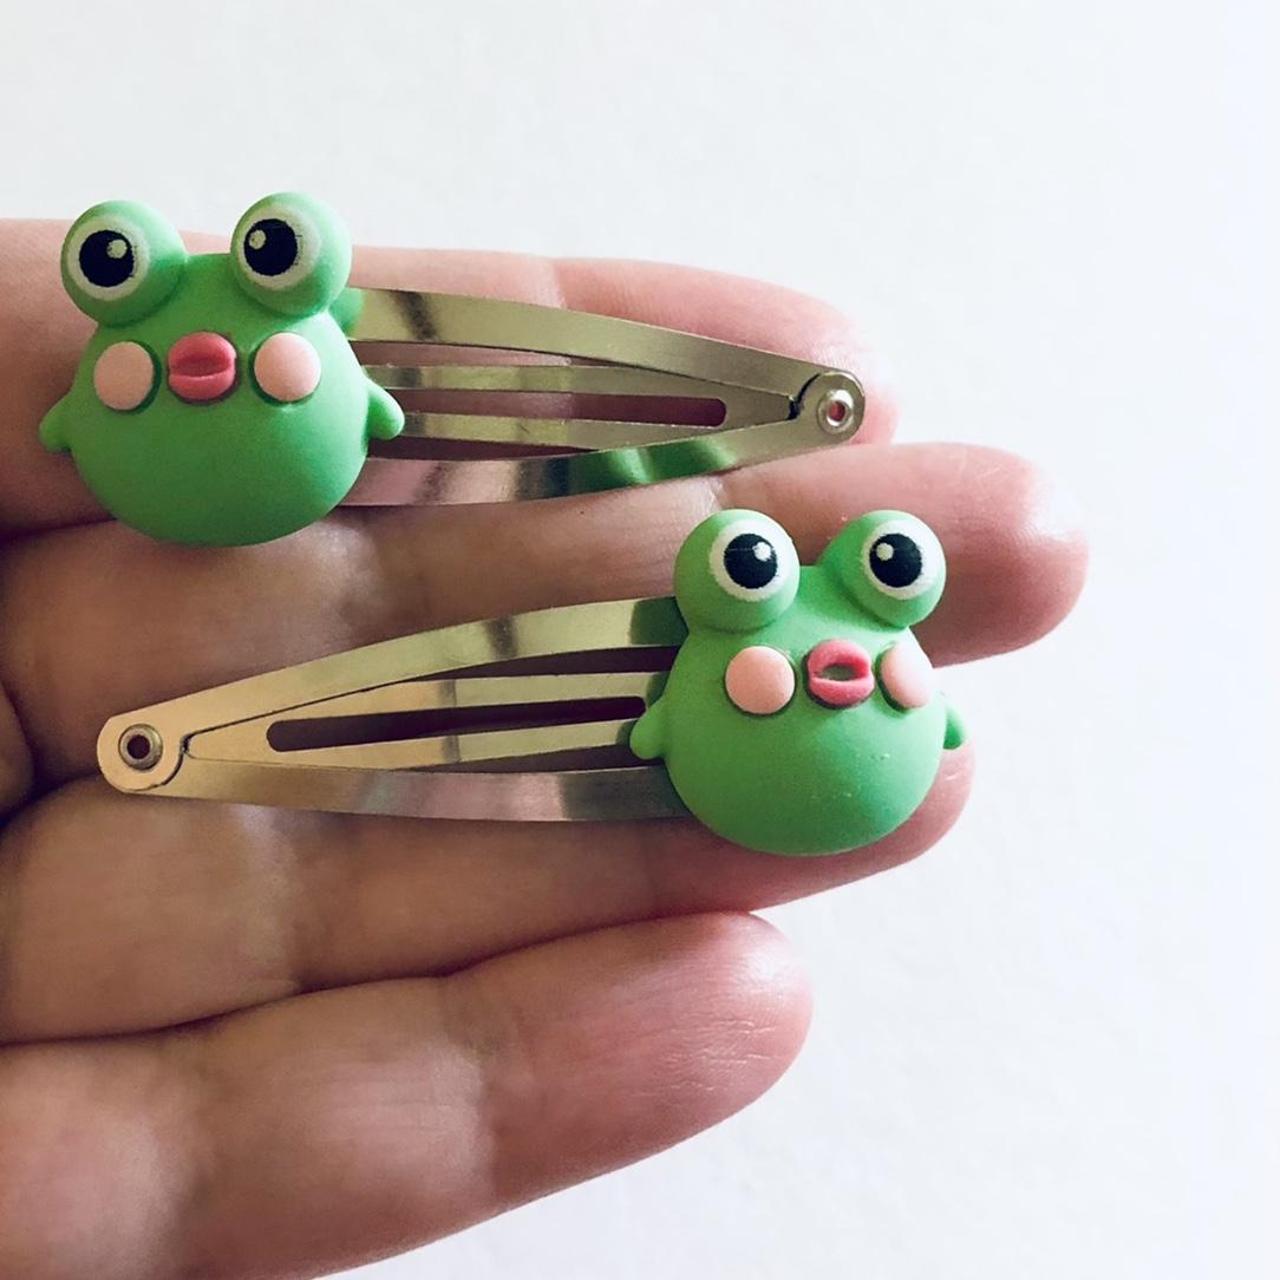 Frog hair clips, frog snap clips, little green - Depop